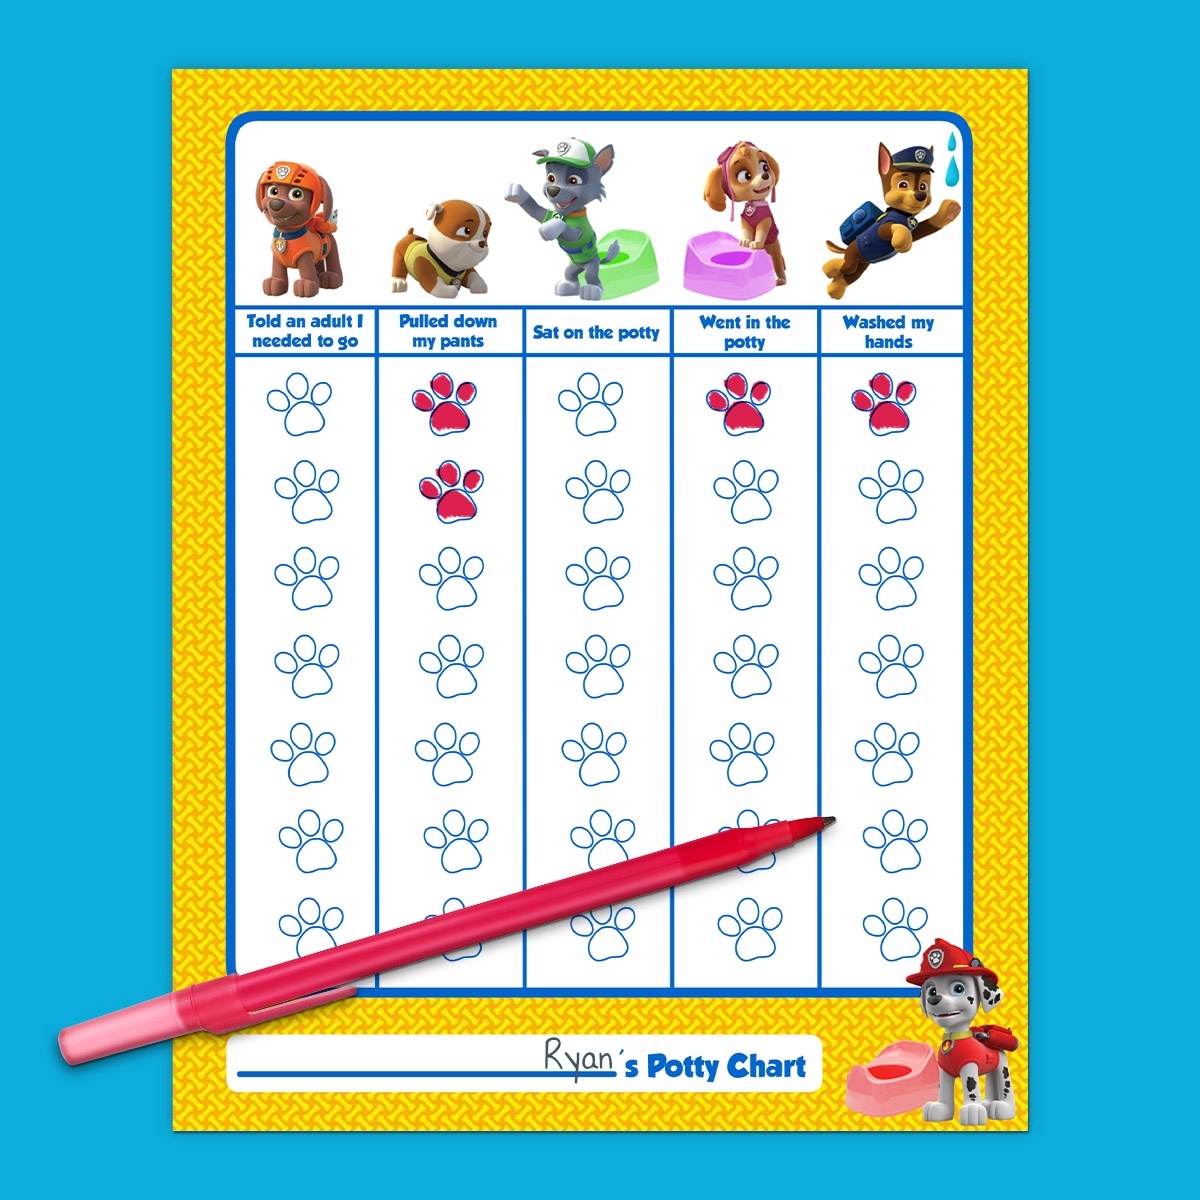 Paw Patrol Potty Training Chart | Nickelodeon Parents - Free Printable Potty Training Charts